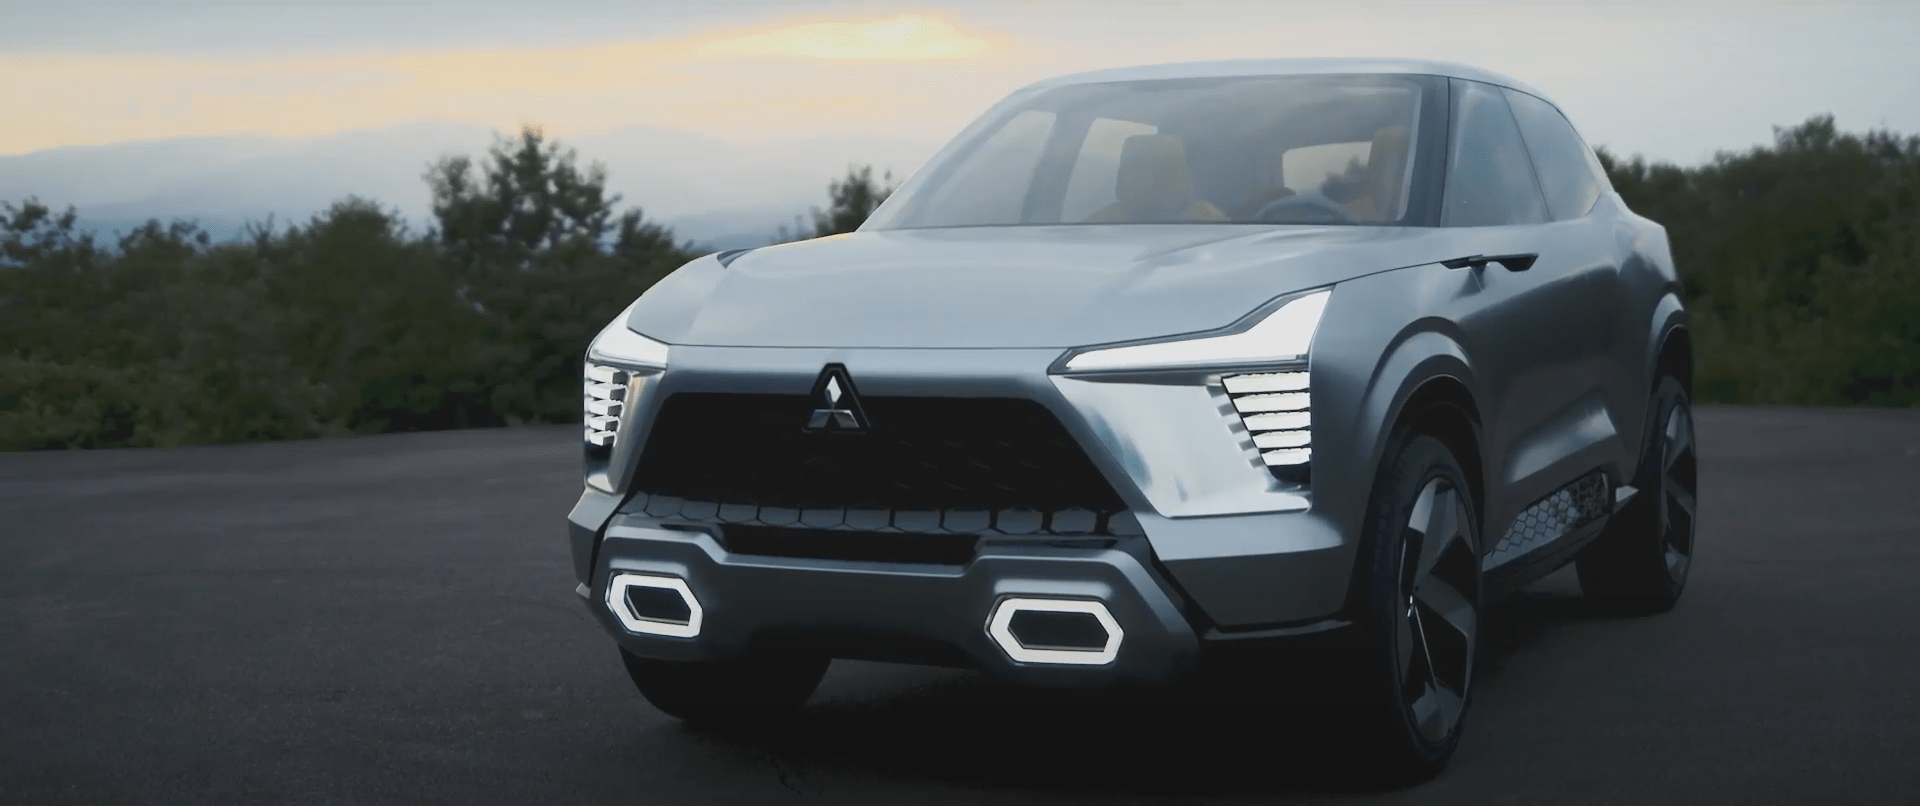 Rahasia Kunci Inspirasi Desain Mitsubishi XFC Concept